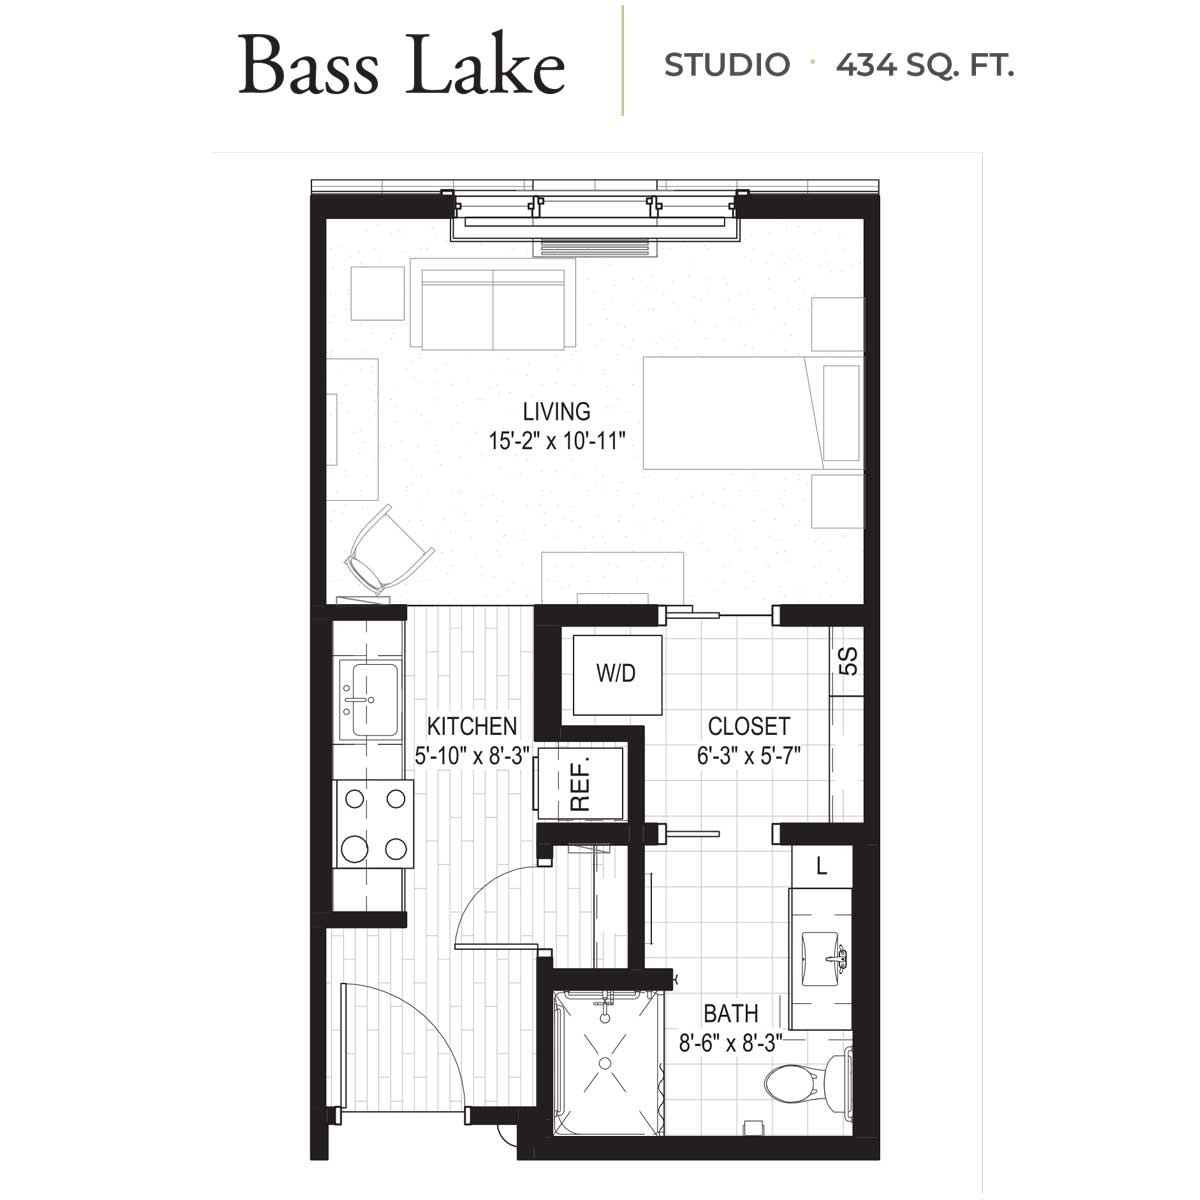 Studio apartment floor plan showing living area, kitchen, bathroom, closet, washer and dryer